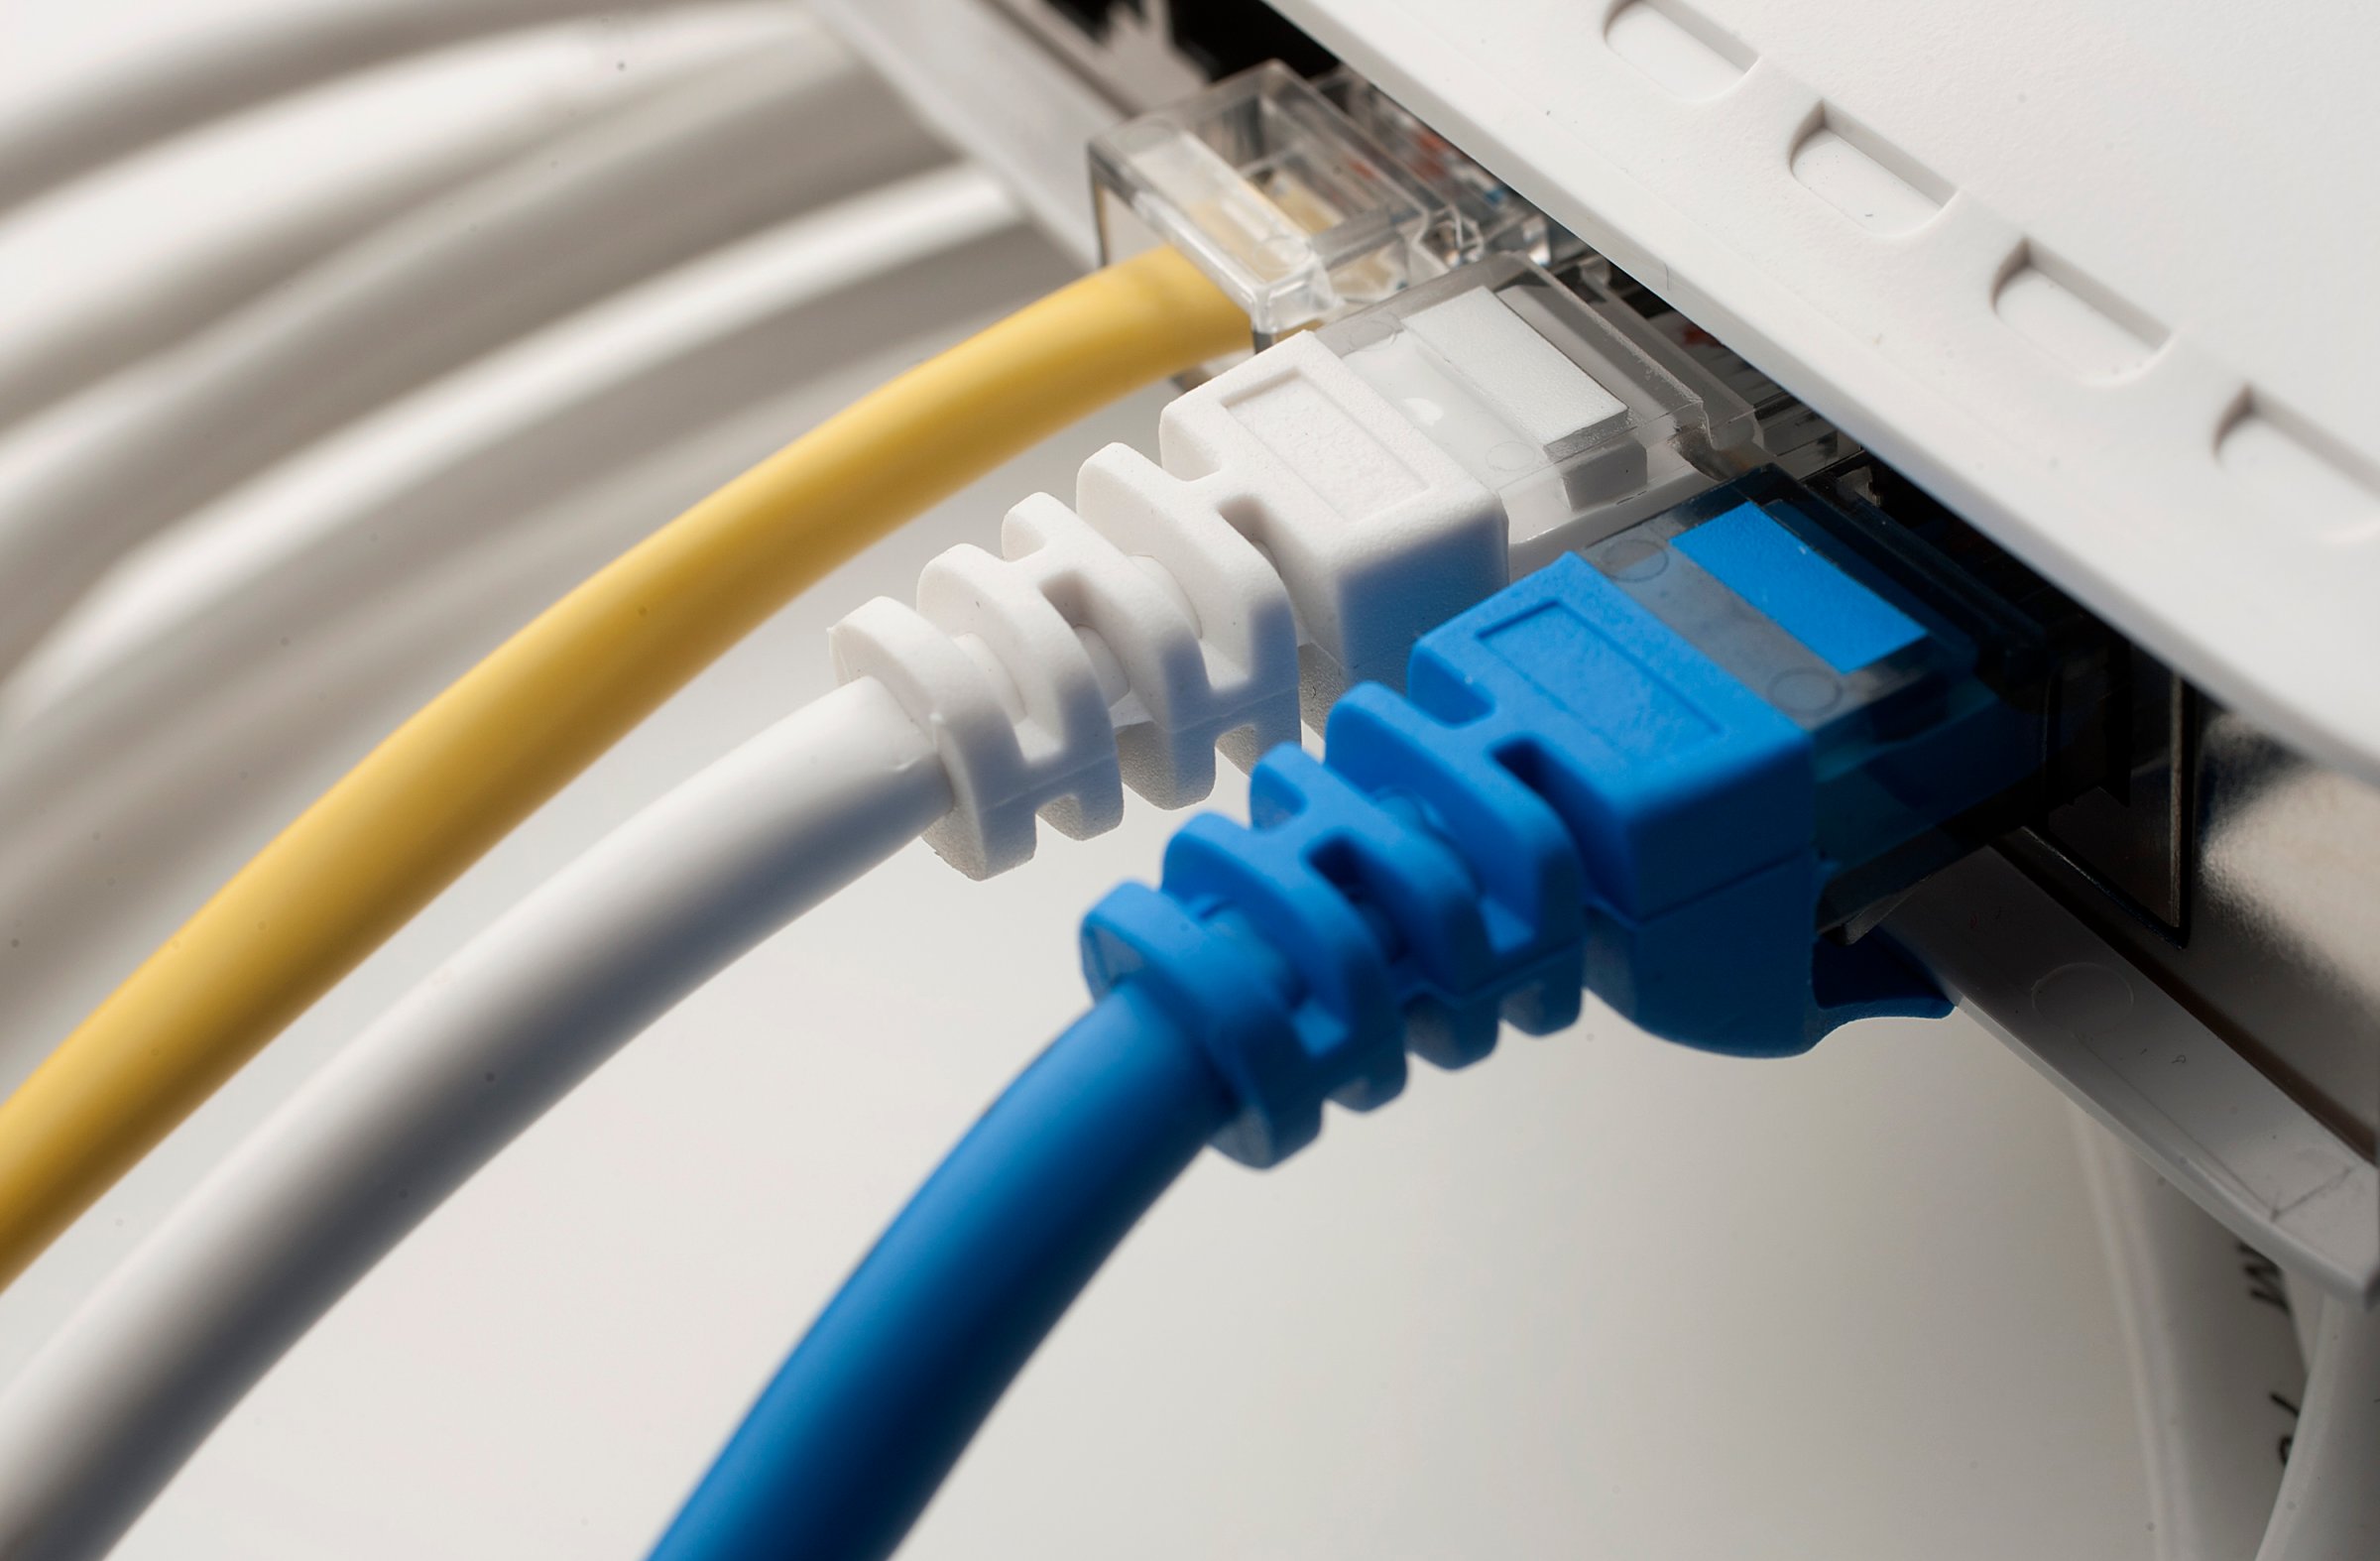 General Images of Ethernet Cords